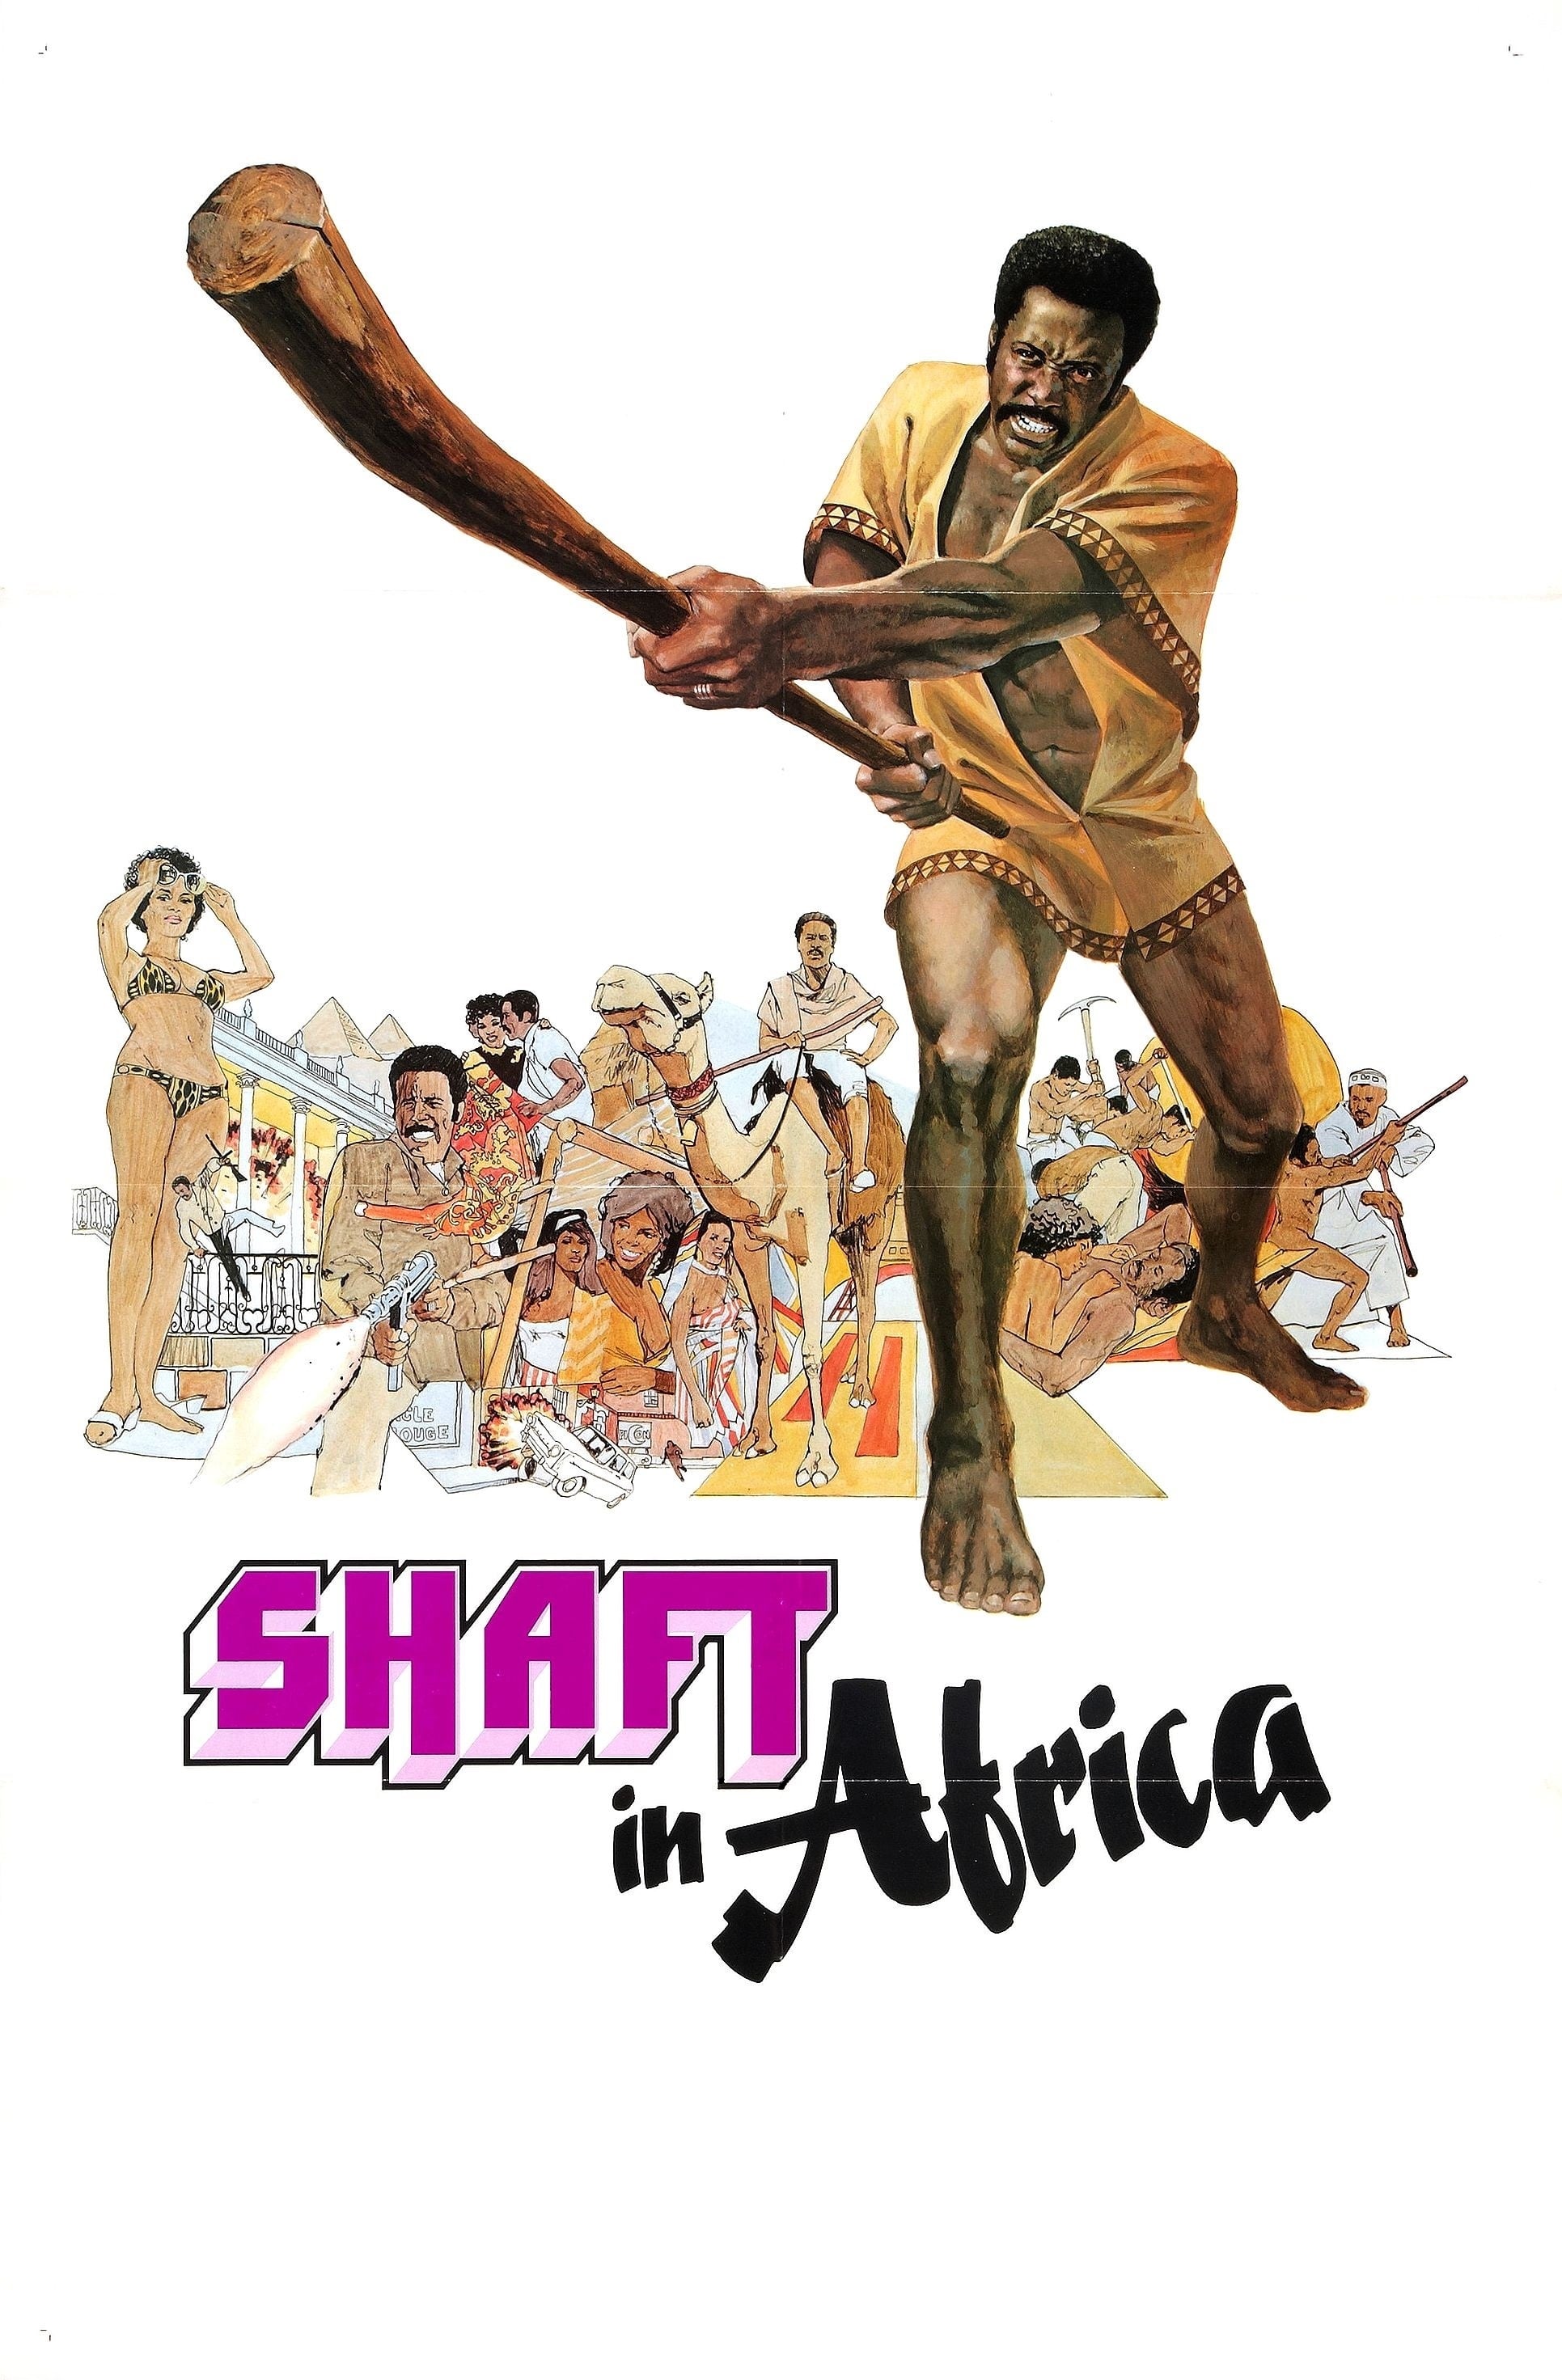 Shaft in Afrika